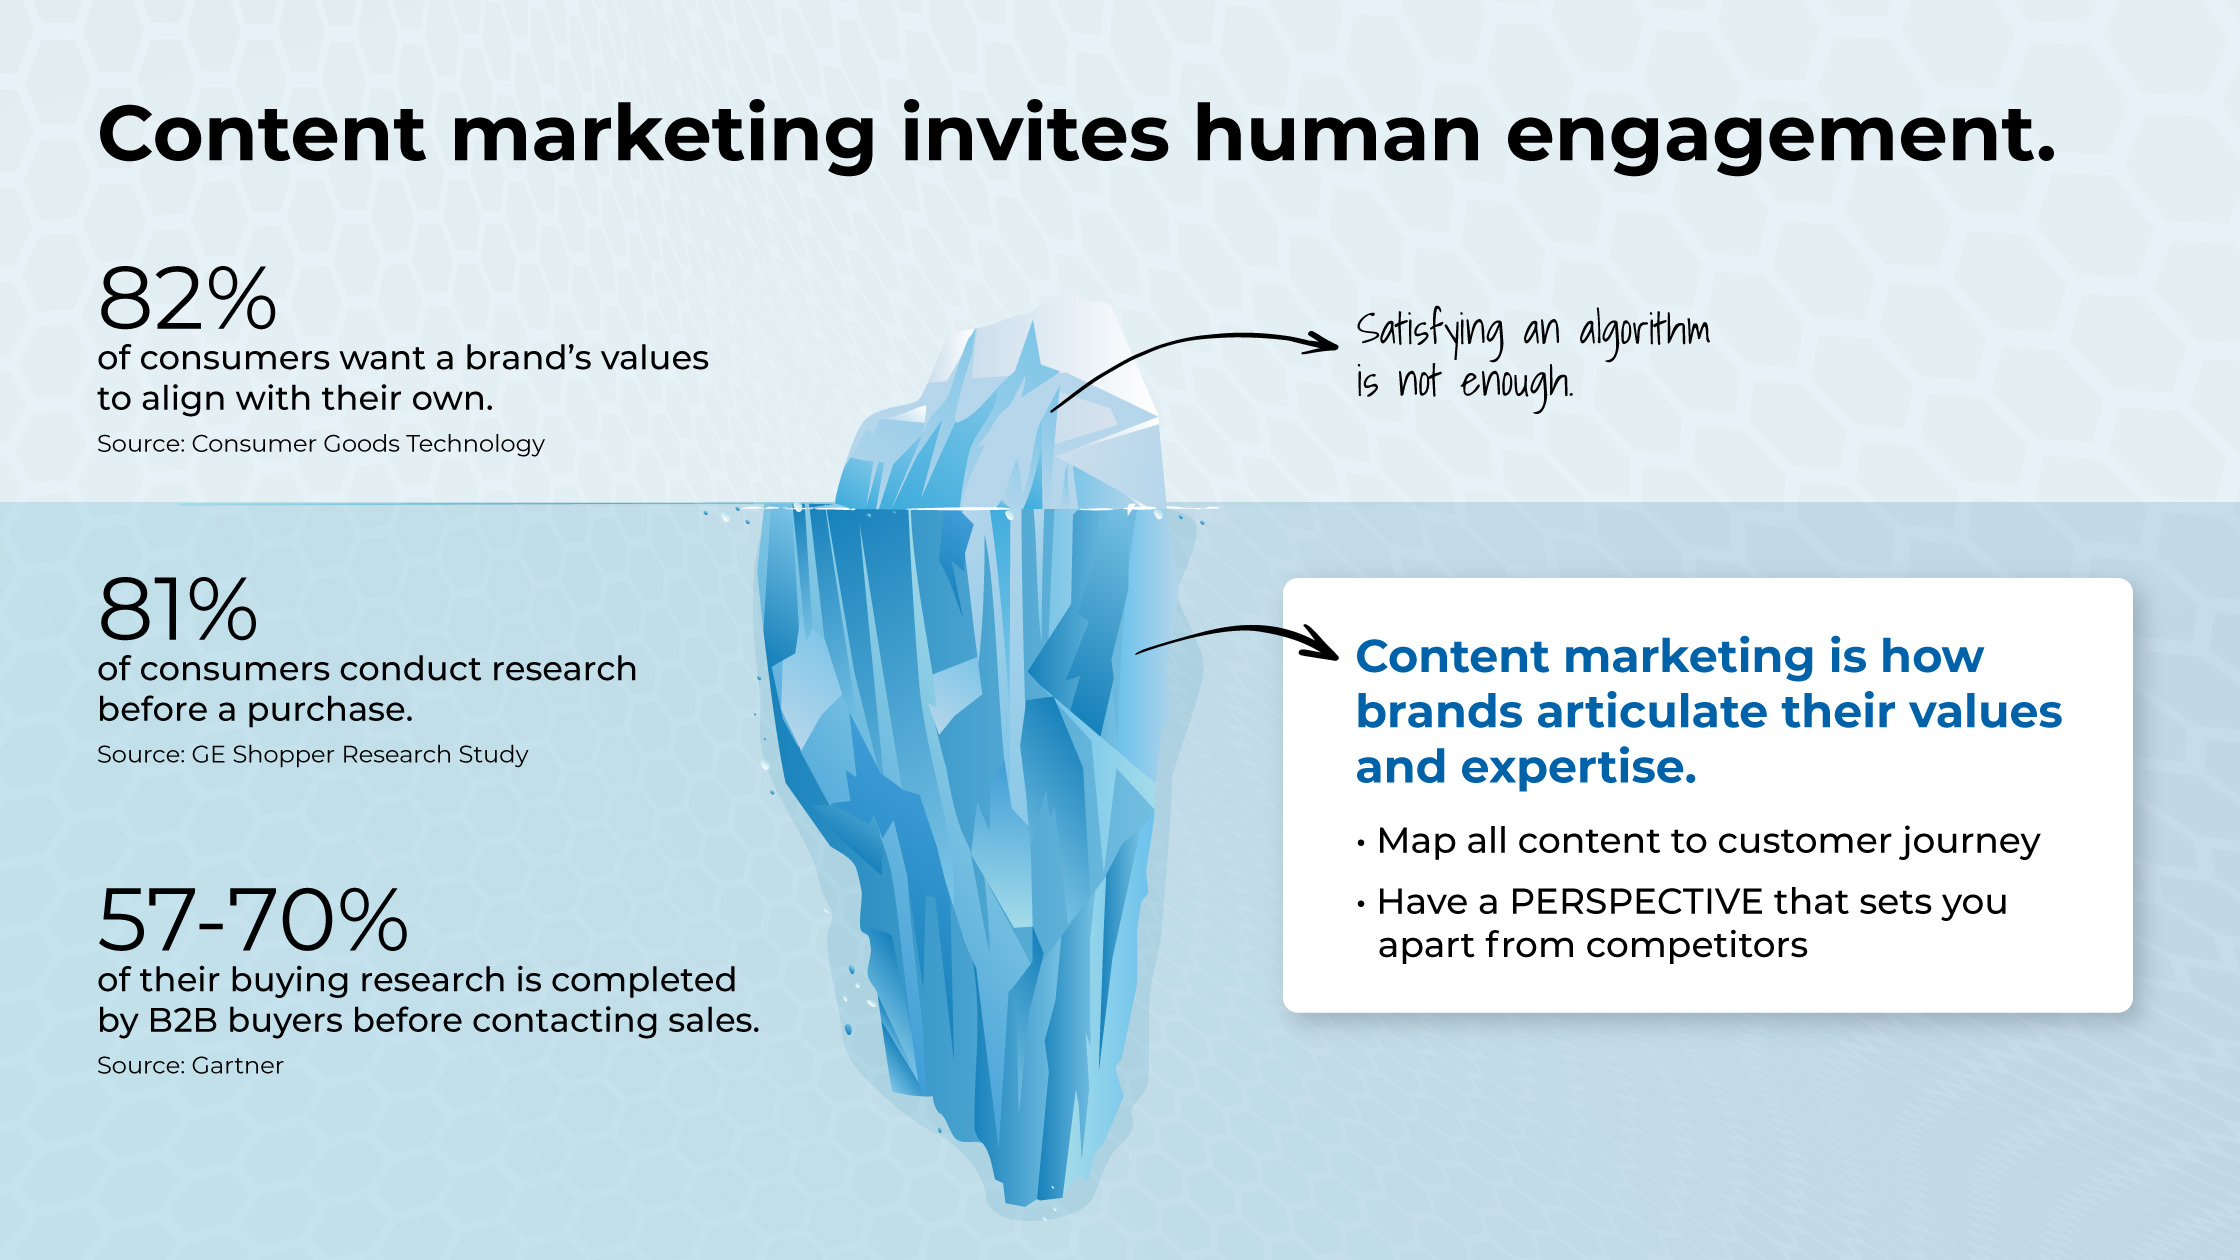 Content marketing invites human engagement.